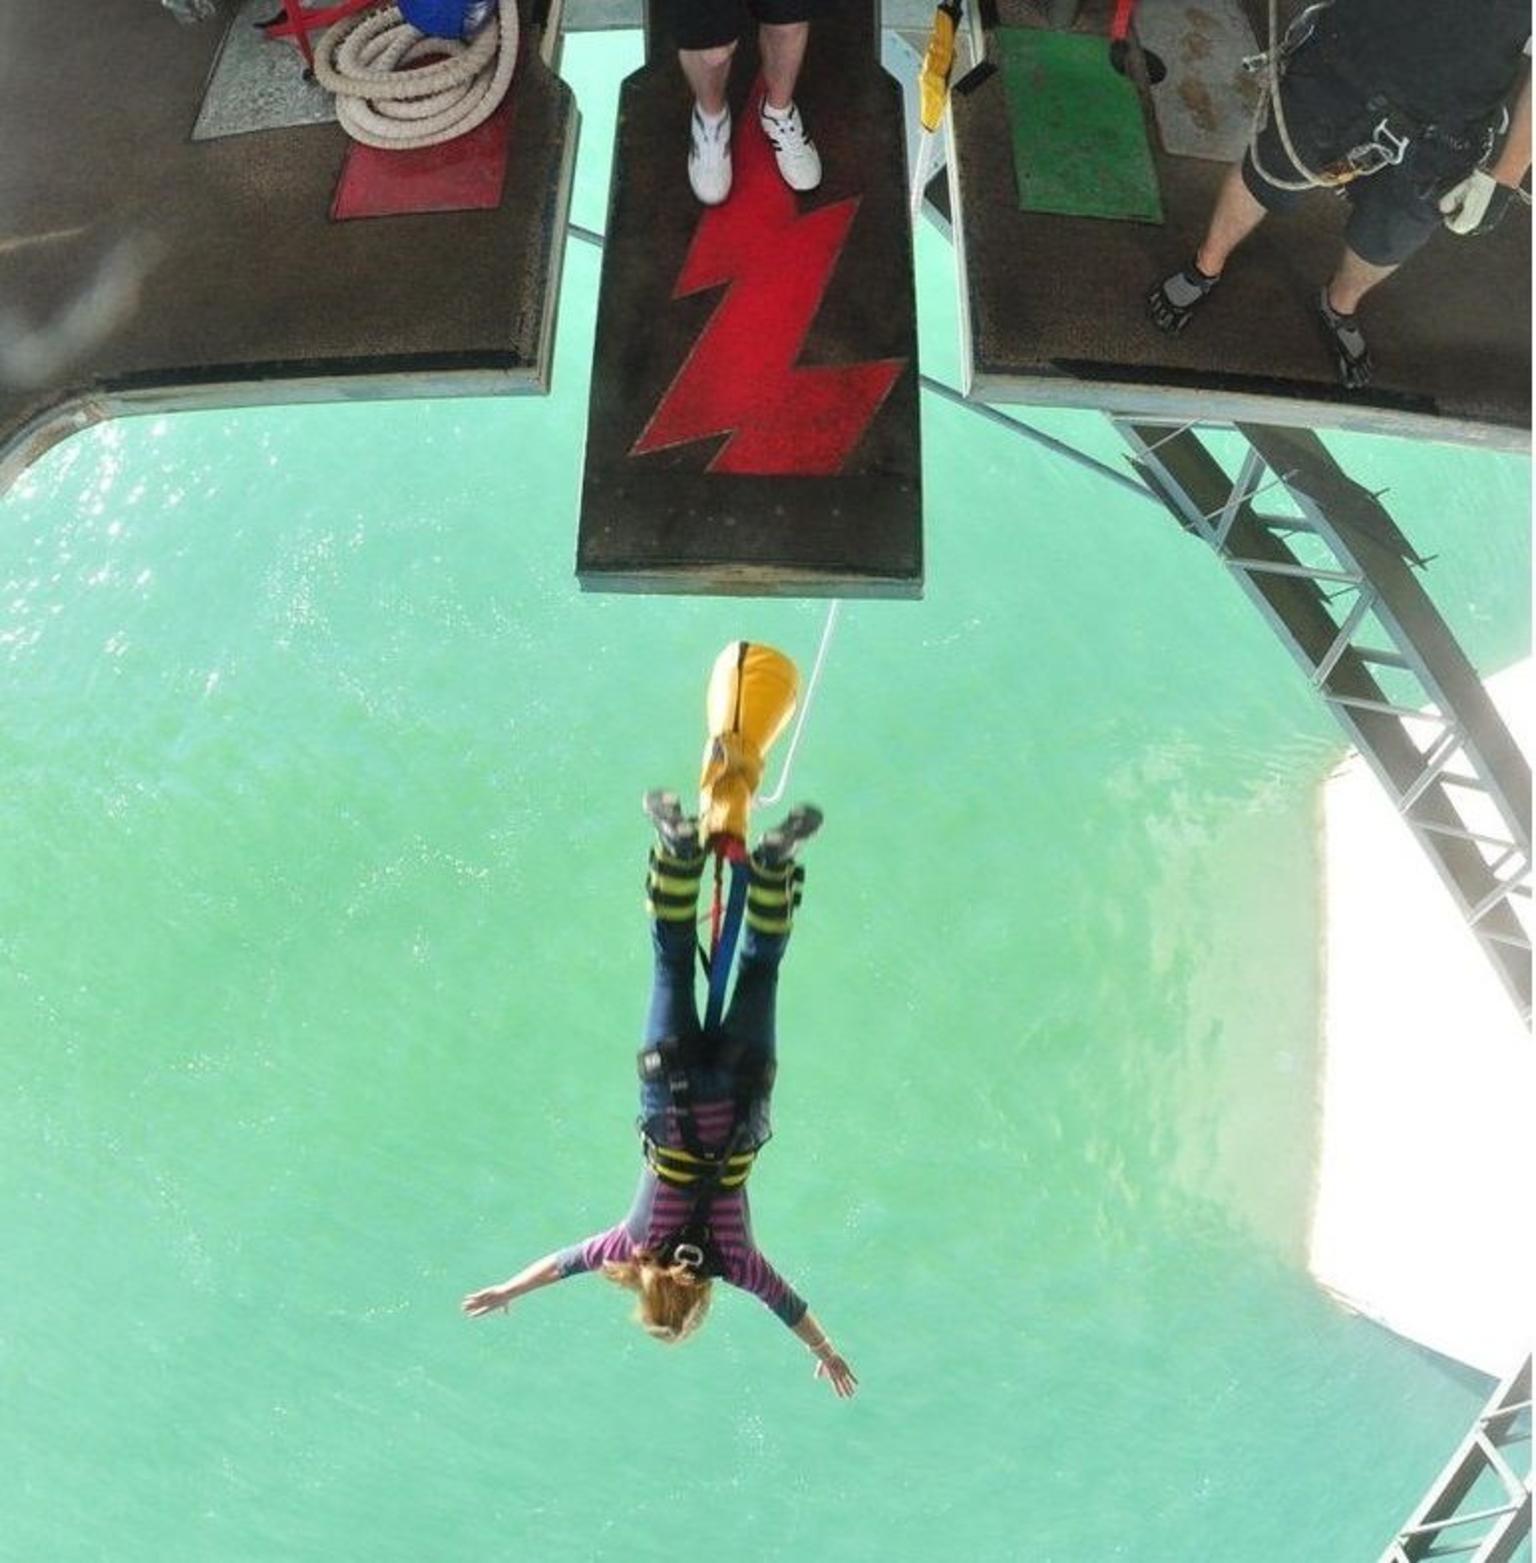 Kelley bungy jumping - I took the dive! (Auckland Harbor Bridge)